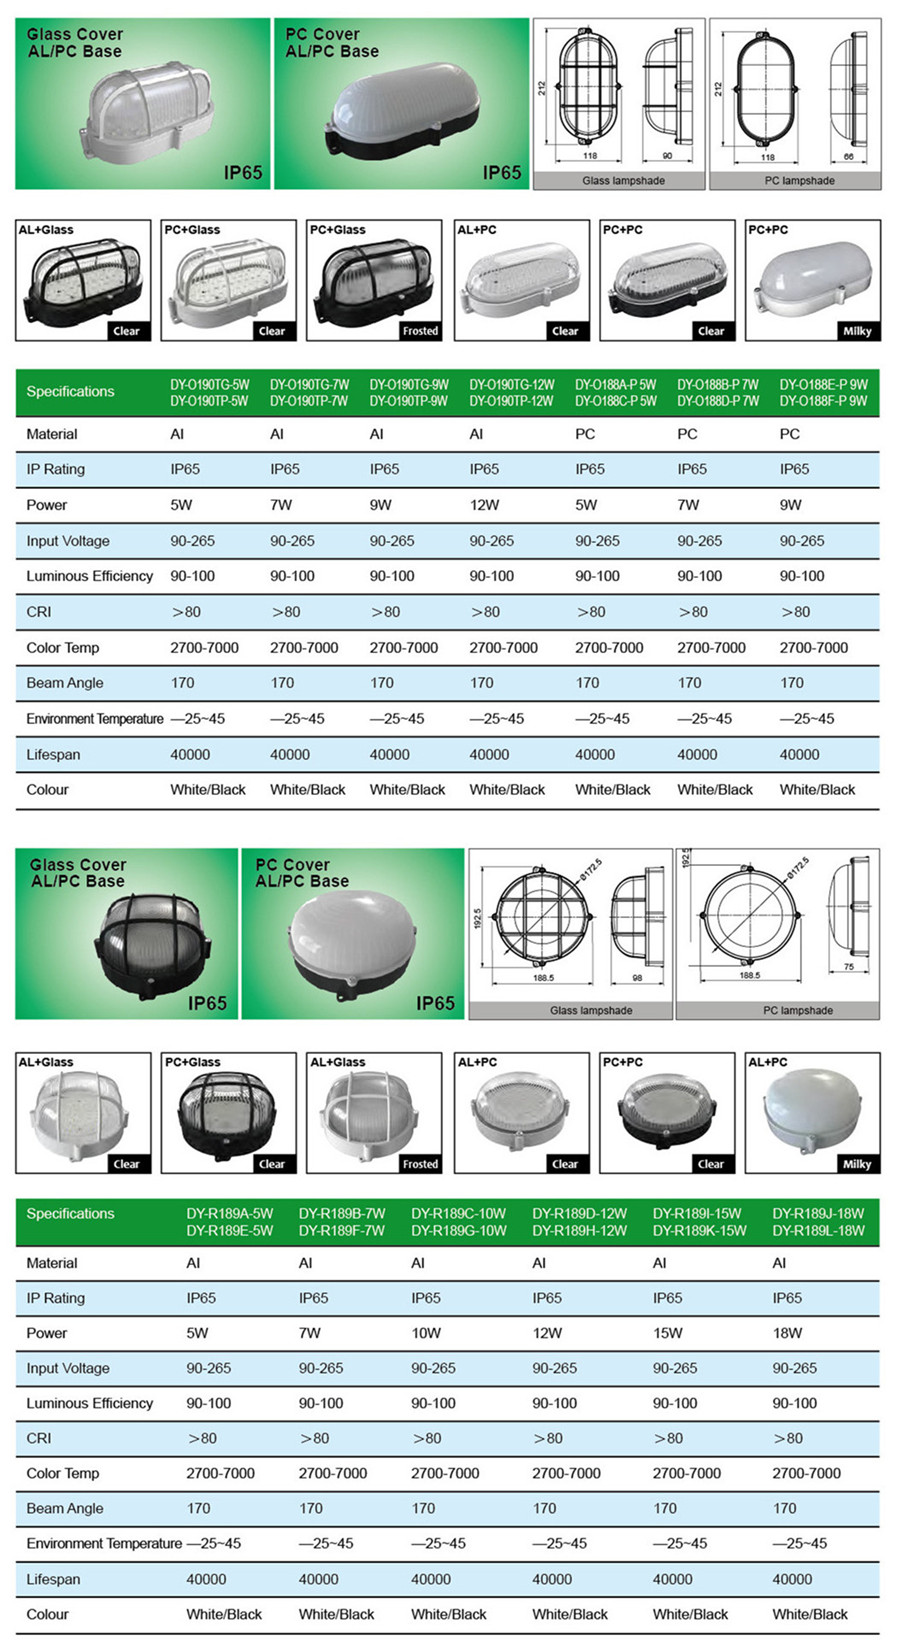 9W Round moisture proof light CE certification waterproof outdoor lamp